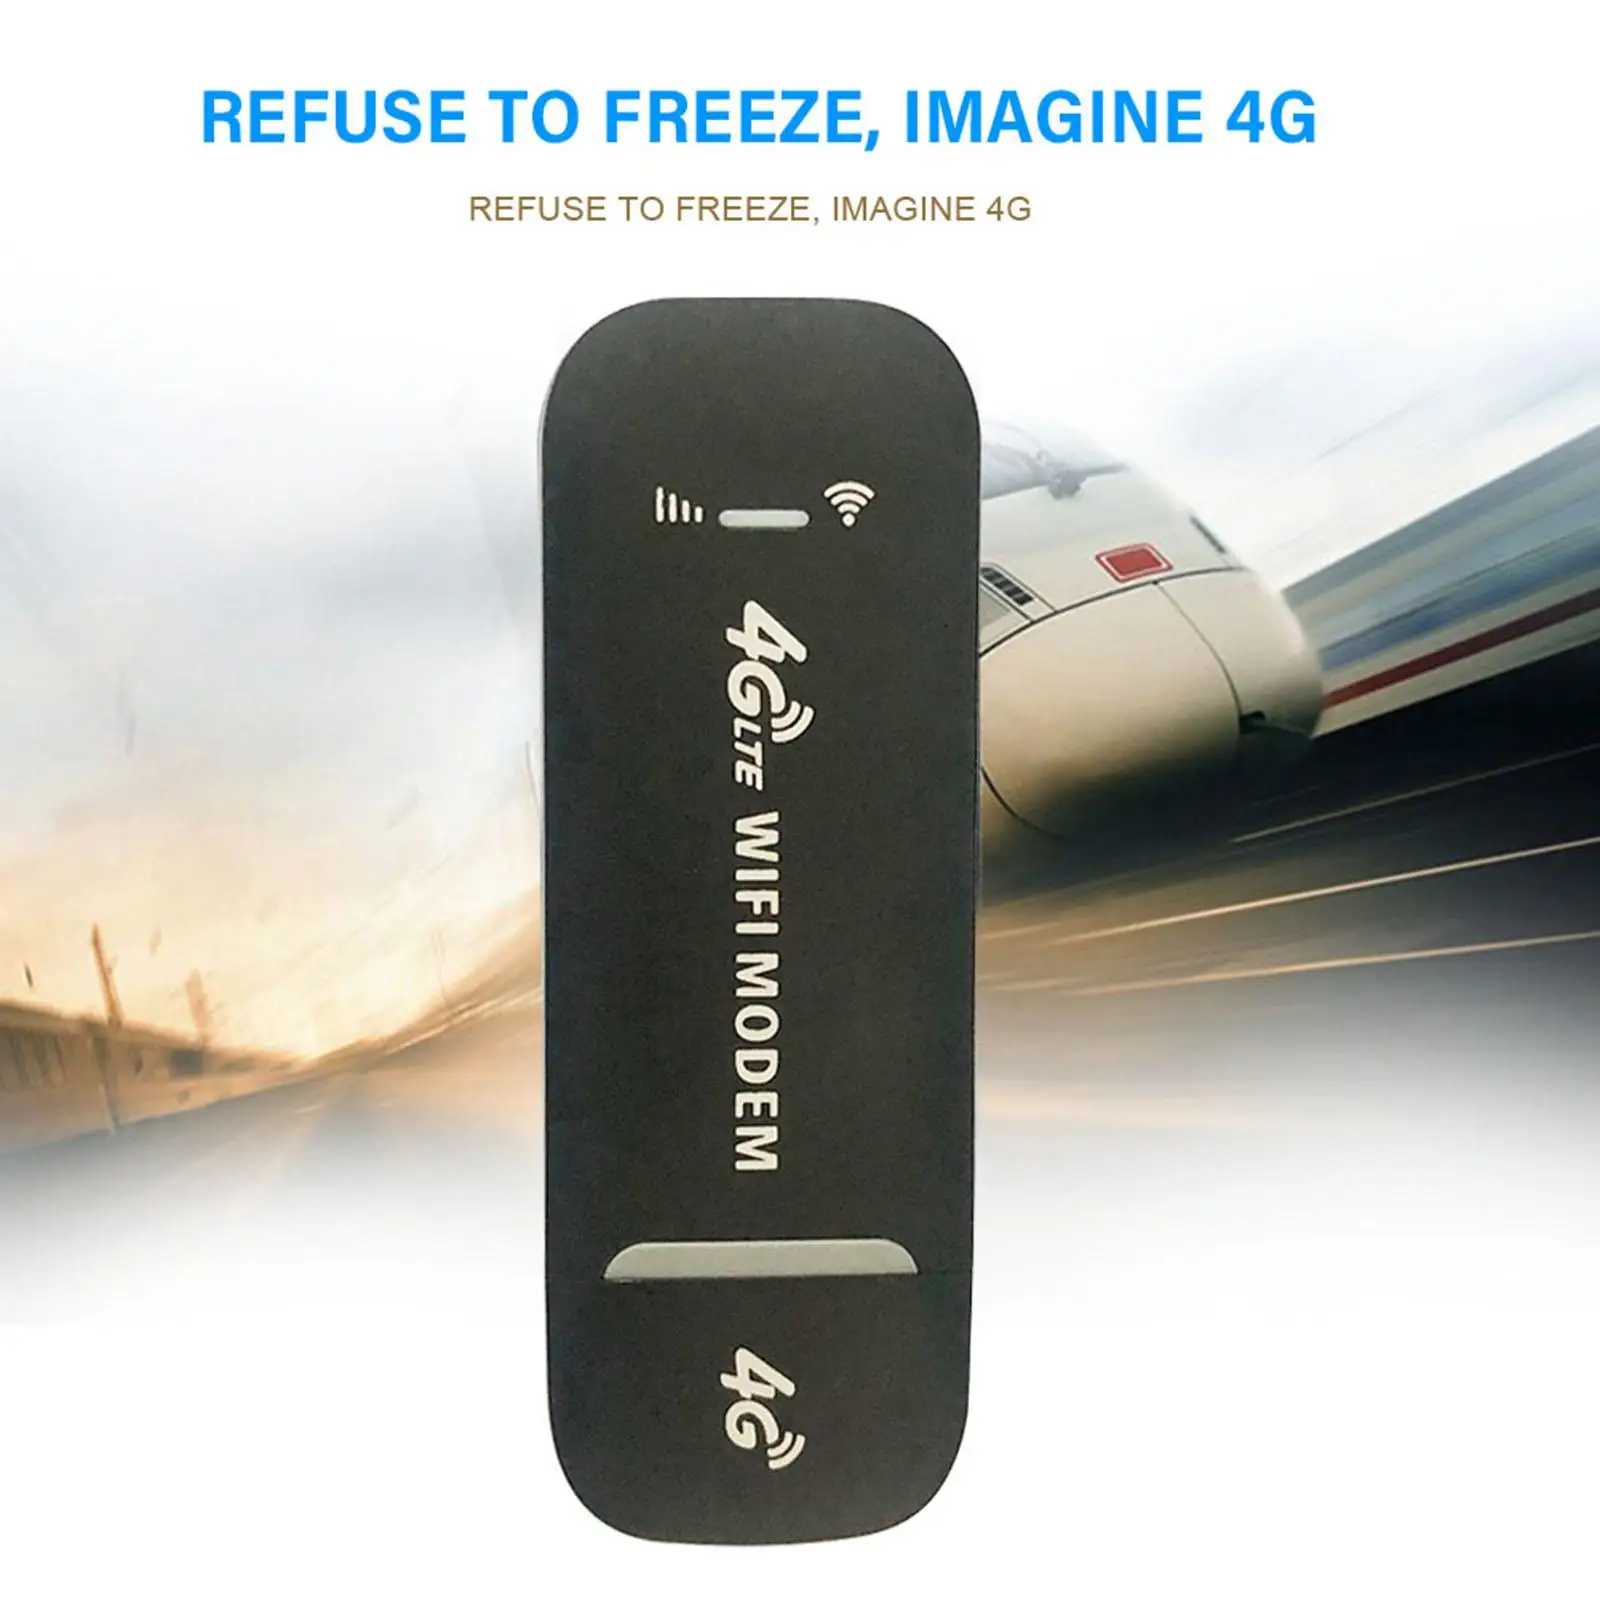 4G LTE USB Modem Dongle Mobile Broadband W/Sim Card Slot Hotspot for Desktop